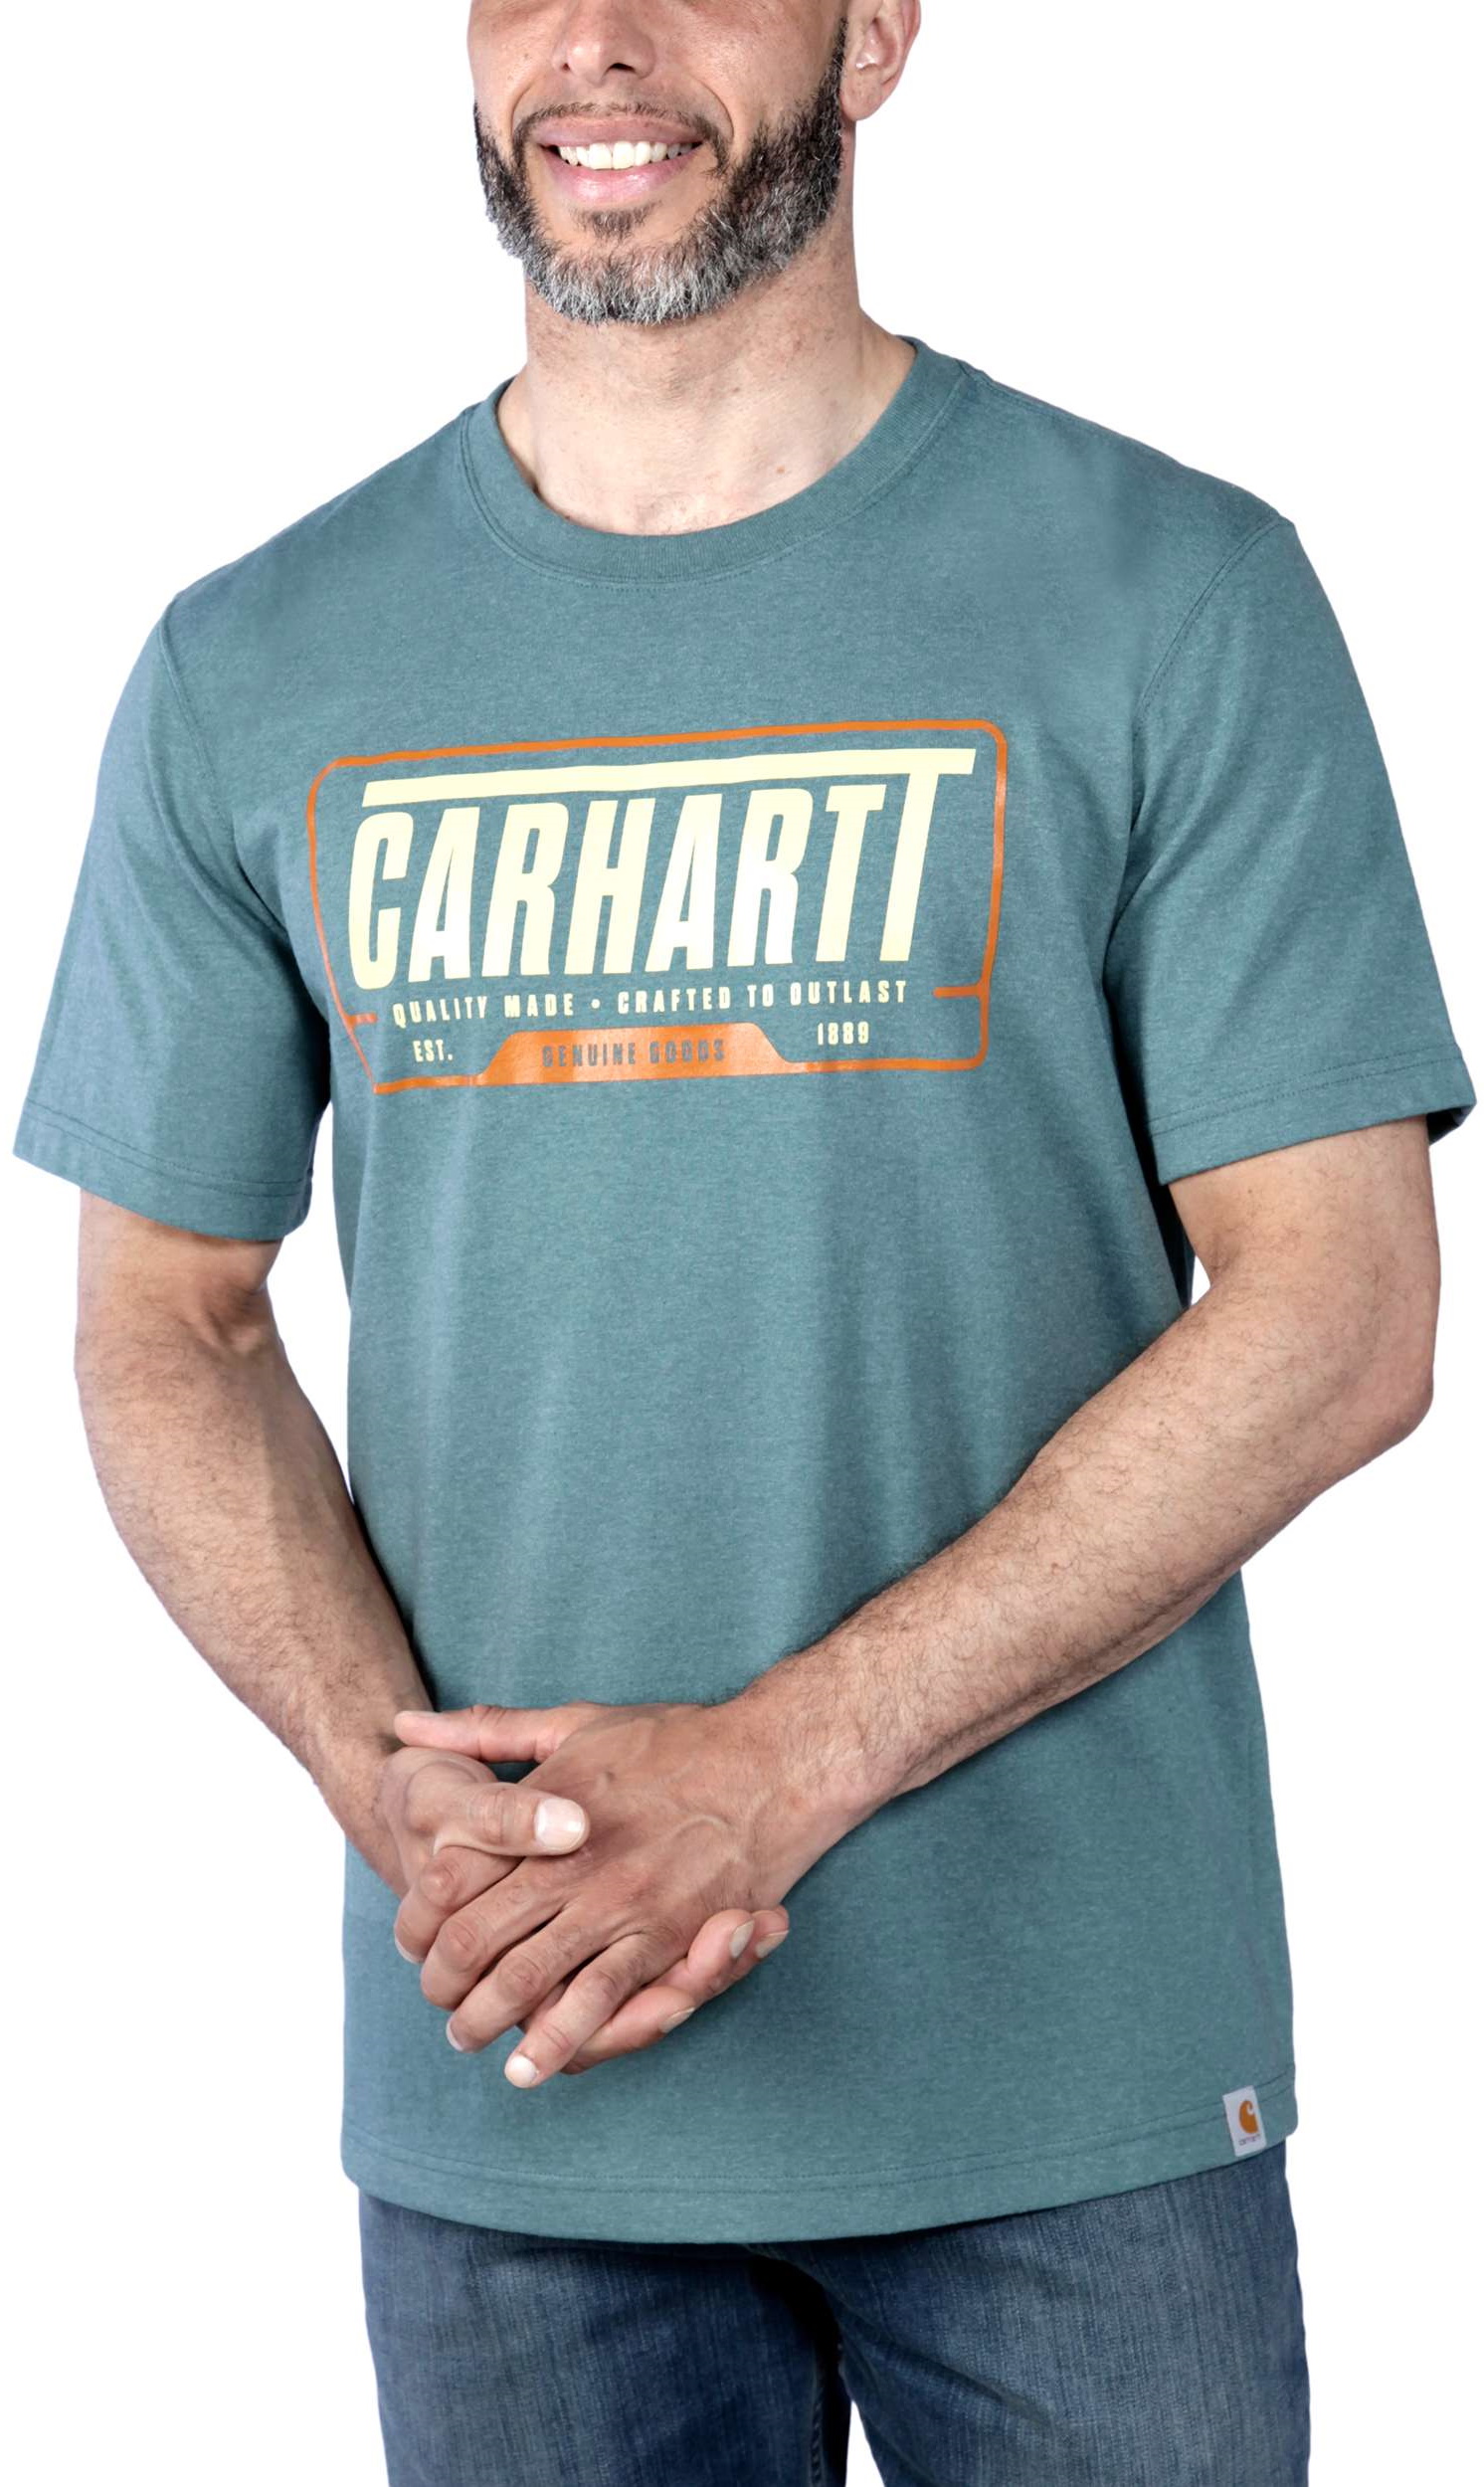 Carhartt Carhartt Heavyweight Graphic T-Shirt S/S Sea Pine Heather L, Sea Pine Heather